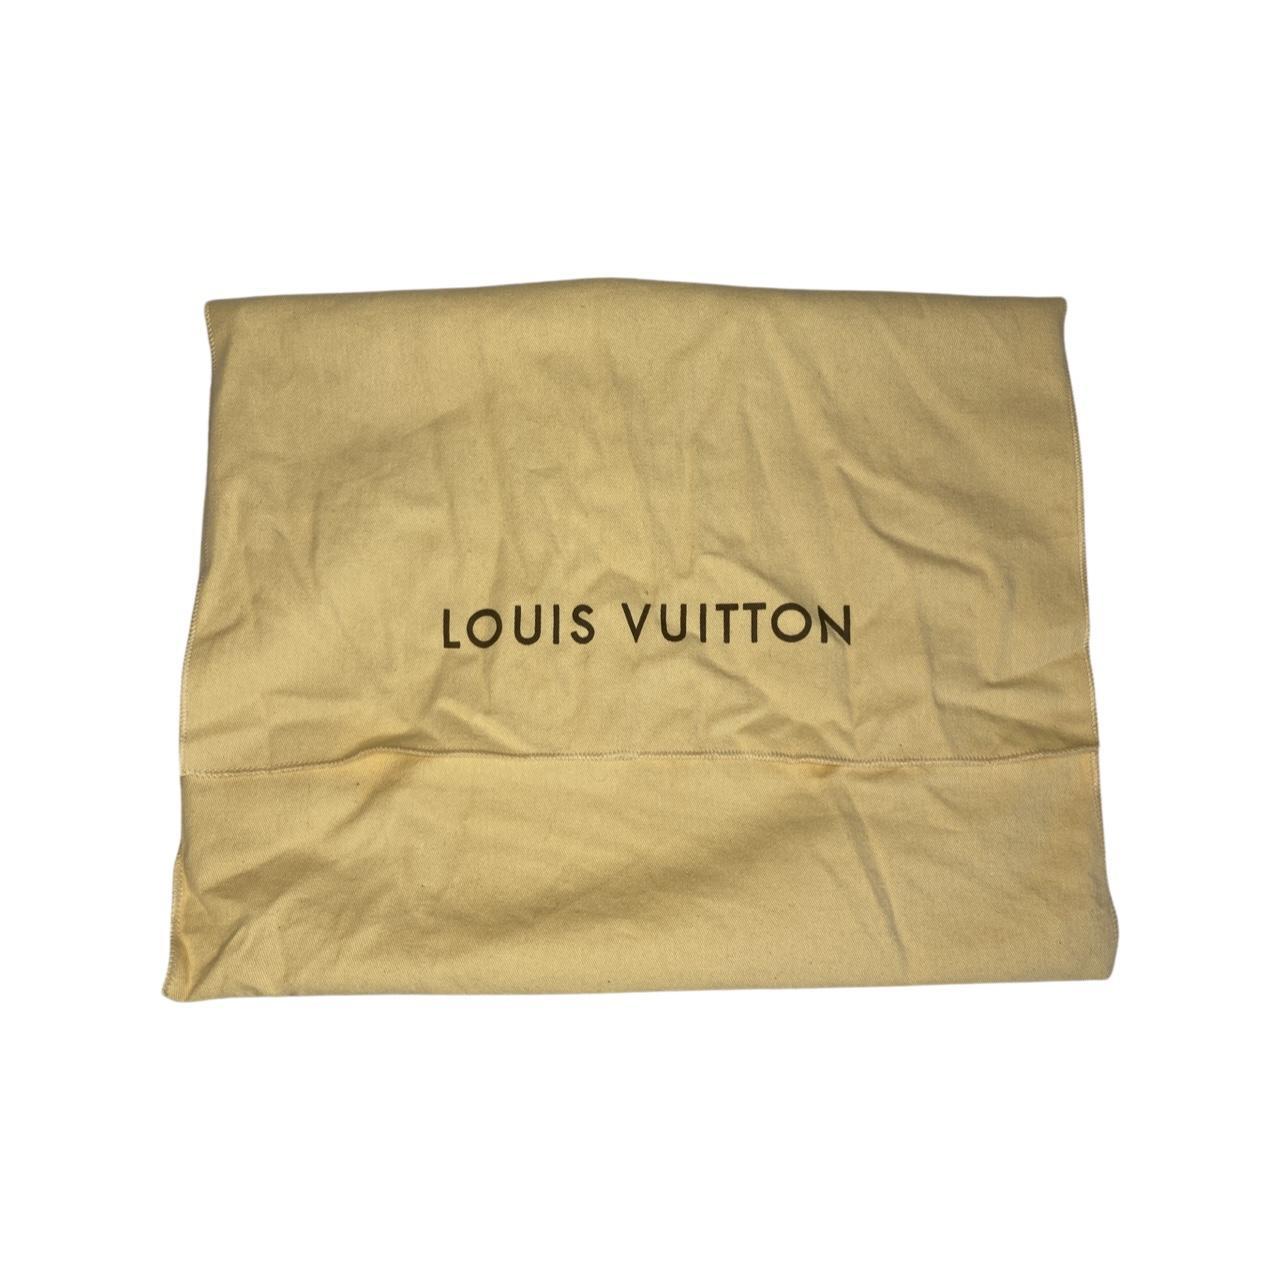 Louis Vuitton x Takashi Murakami Koala Wallet. Very - Depop